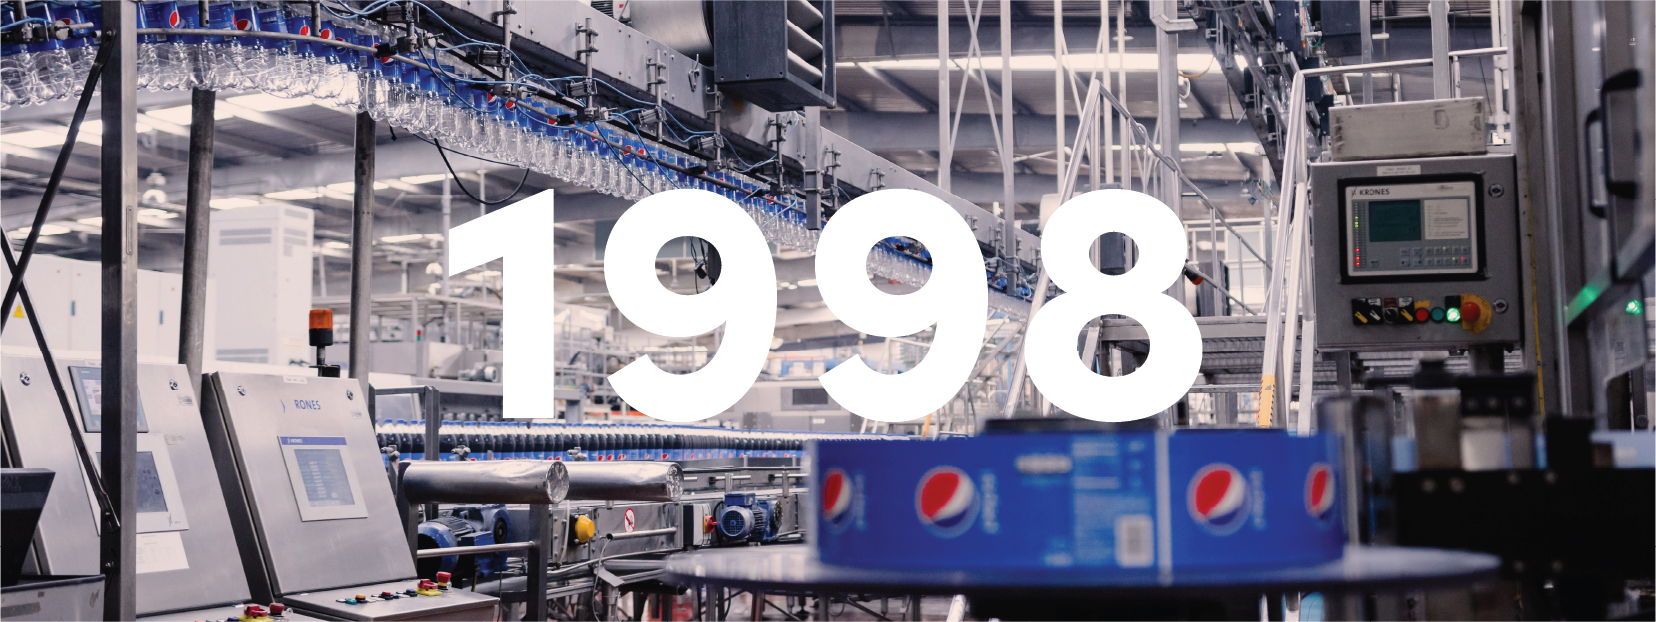 1996. We started international expansion as PepsiCo Anchor Bottler.